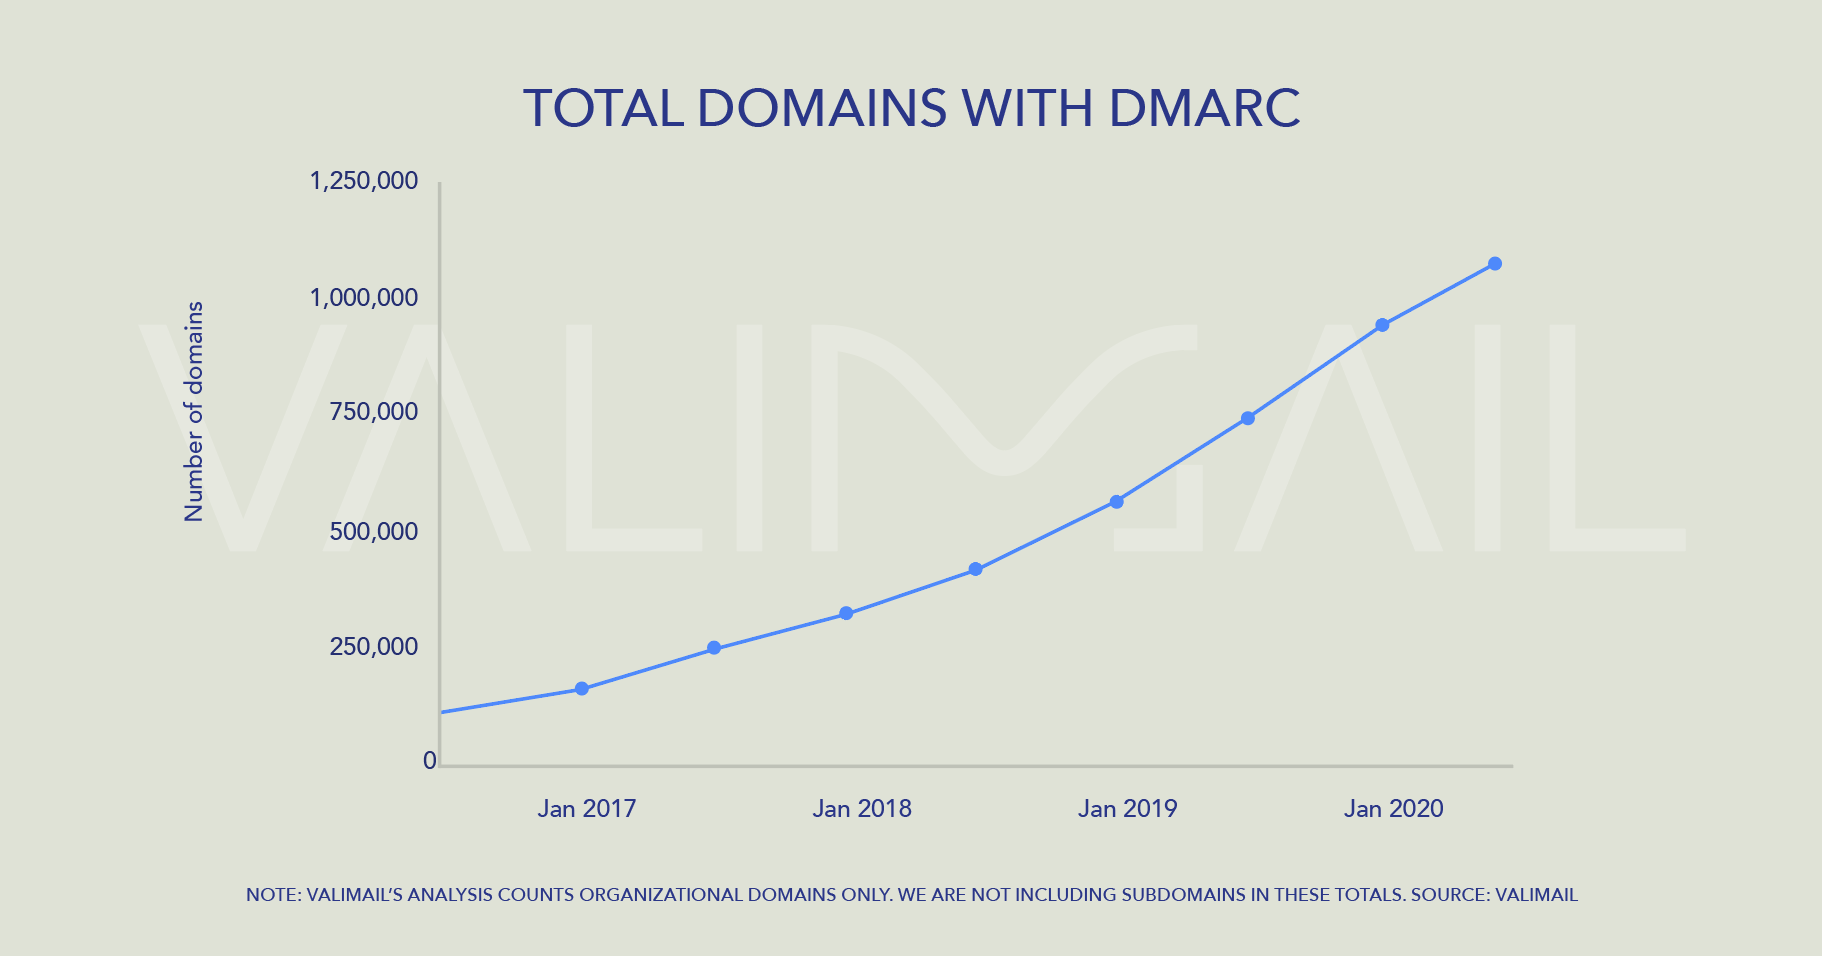 Line chart showing DMARC records surpassing 1M in June 2020